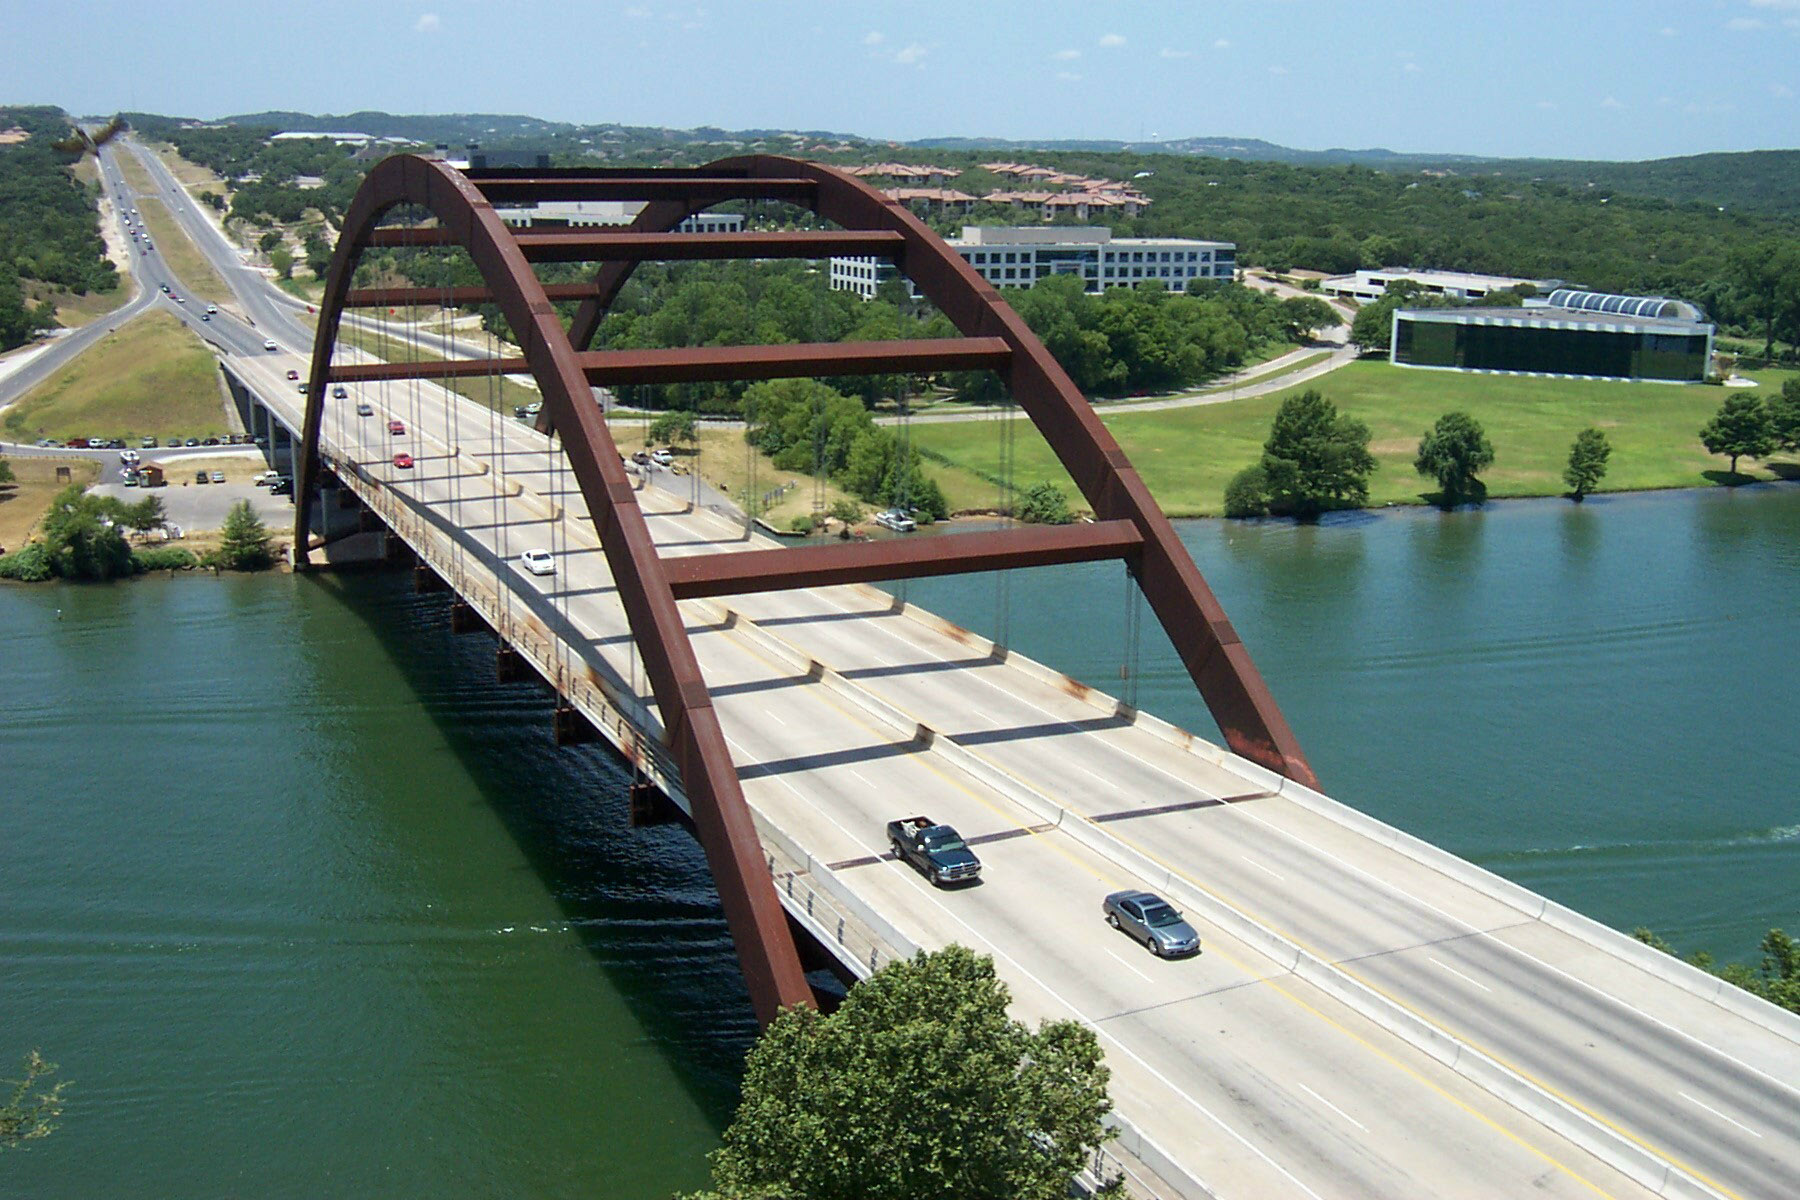 Pennybacker Bridge in Austin, Texas image - Free stock photo - Public